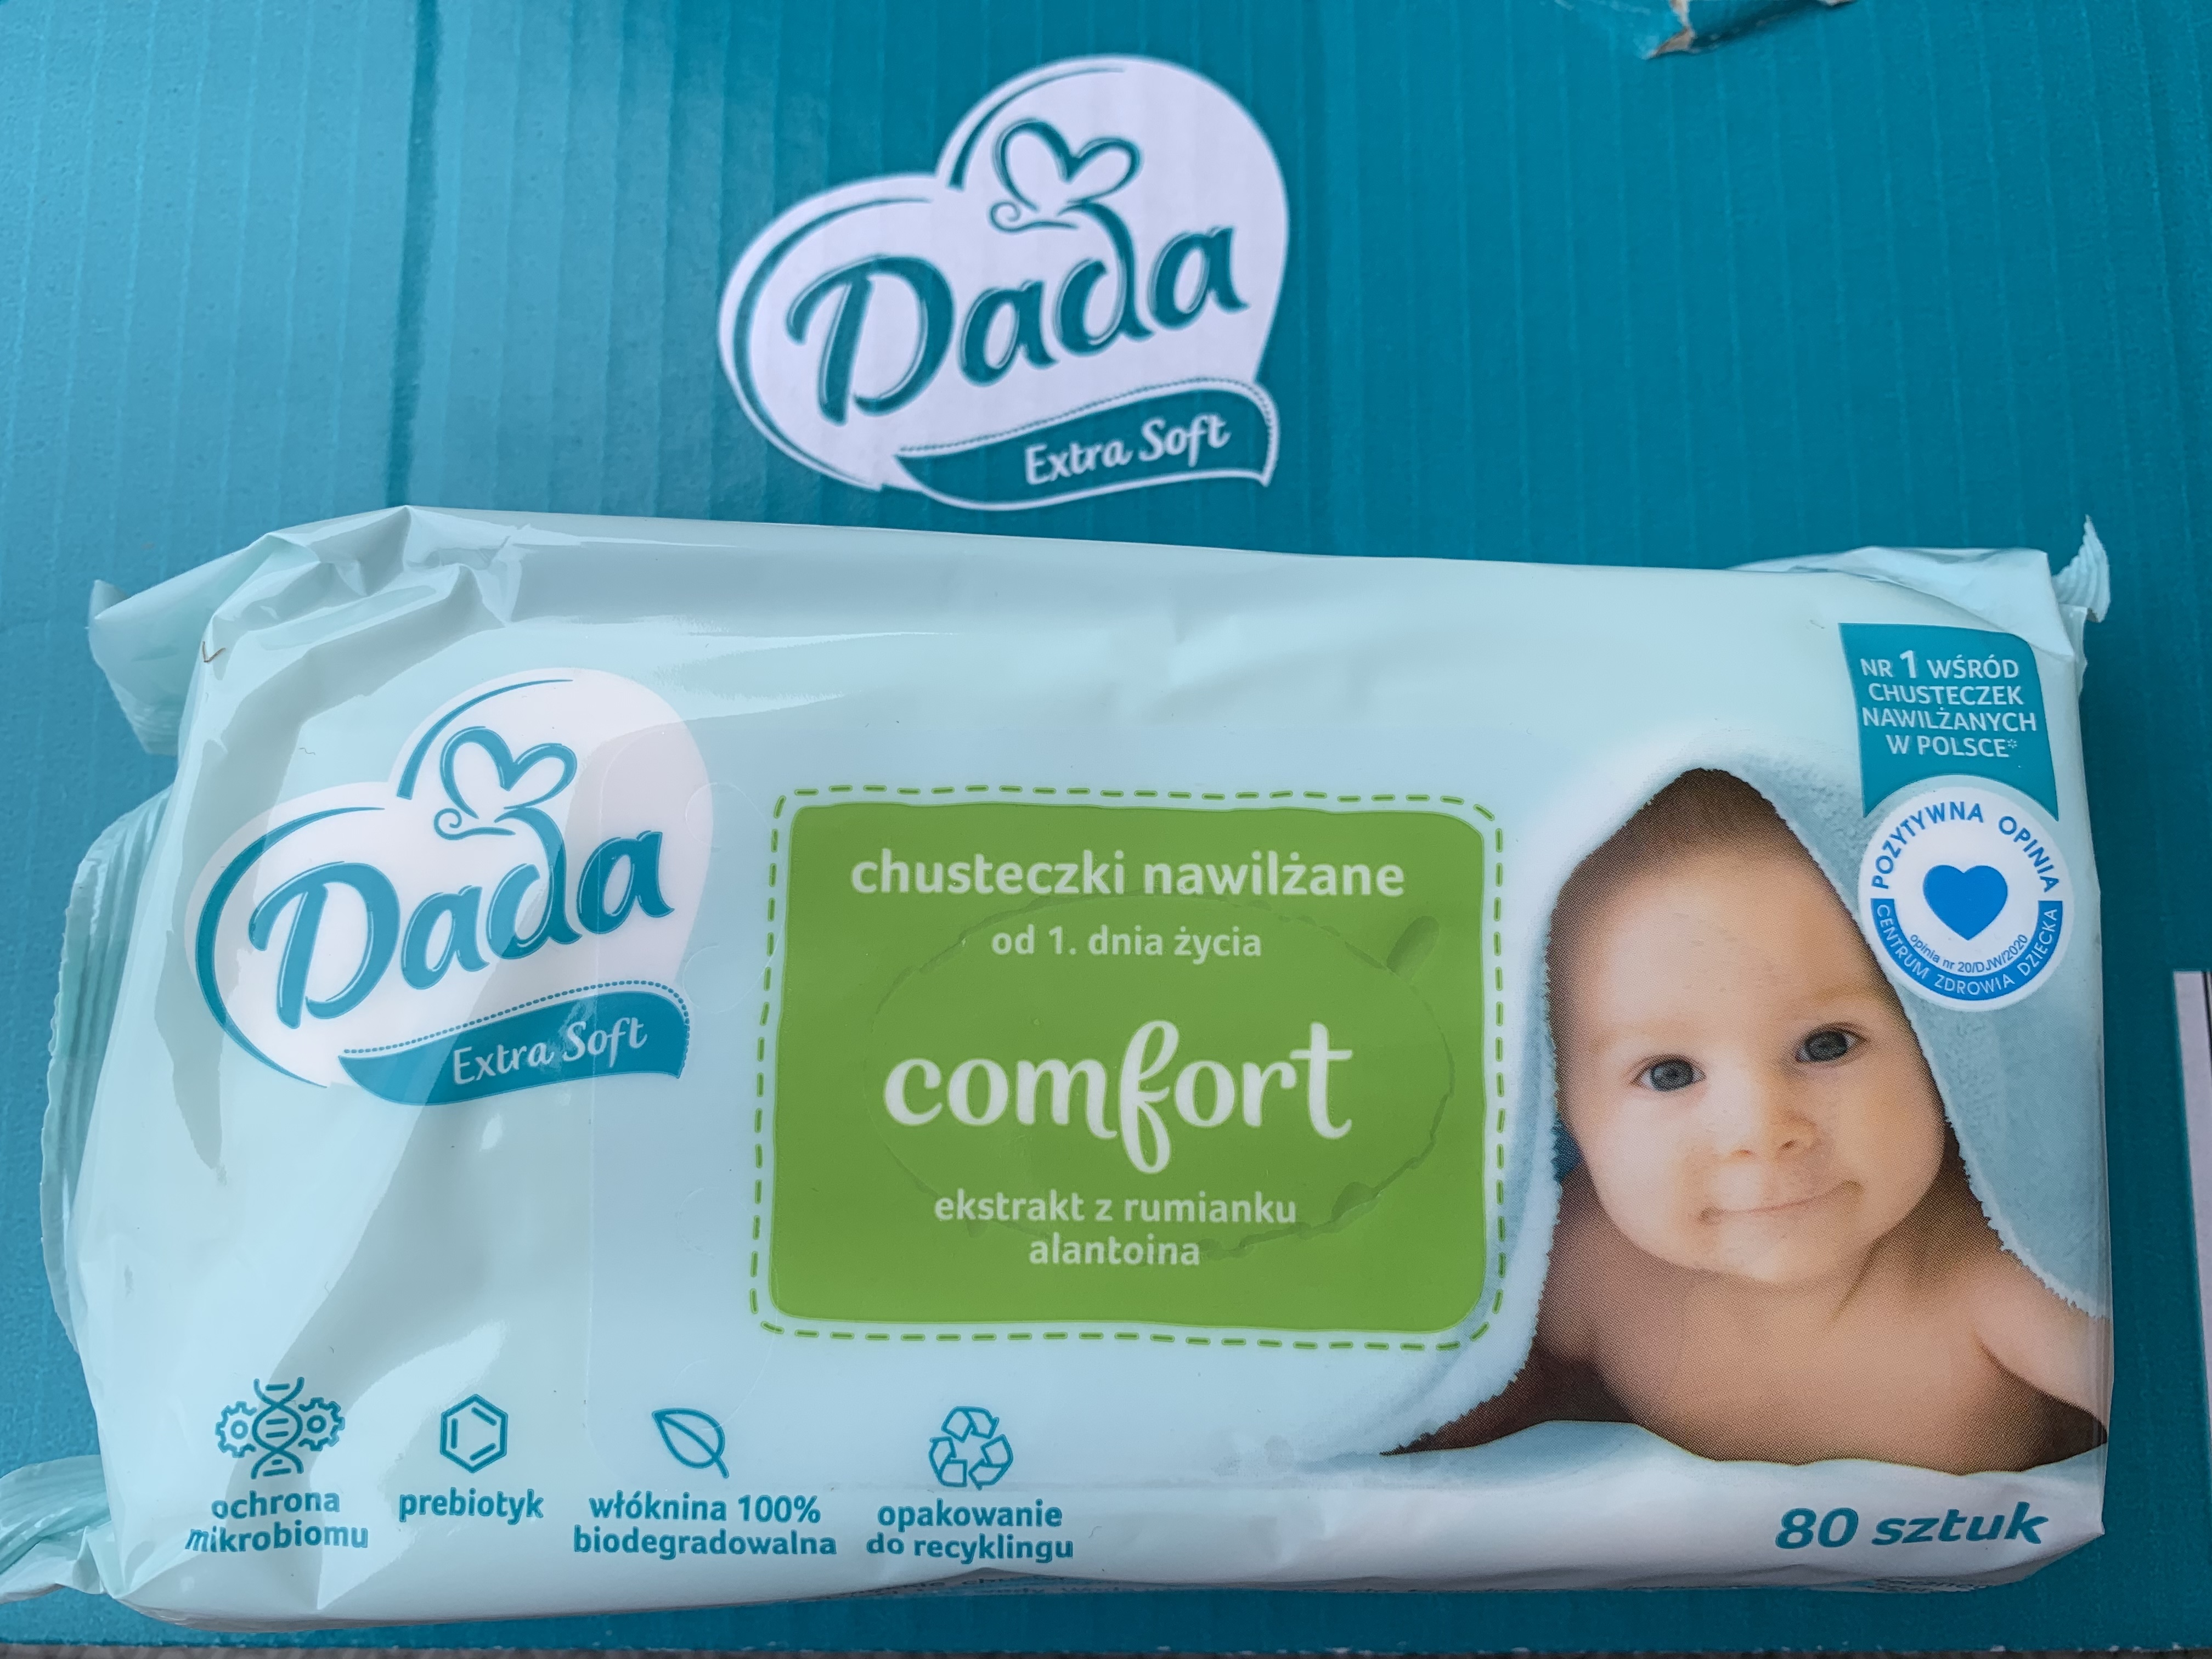 Dada comfort